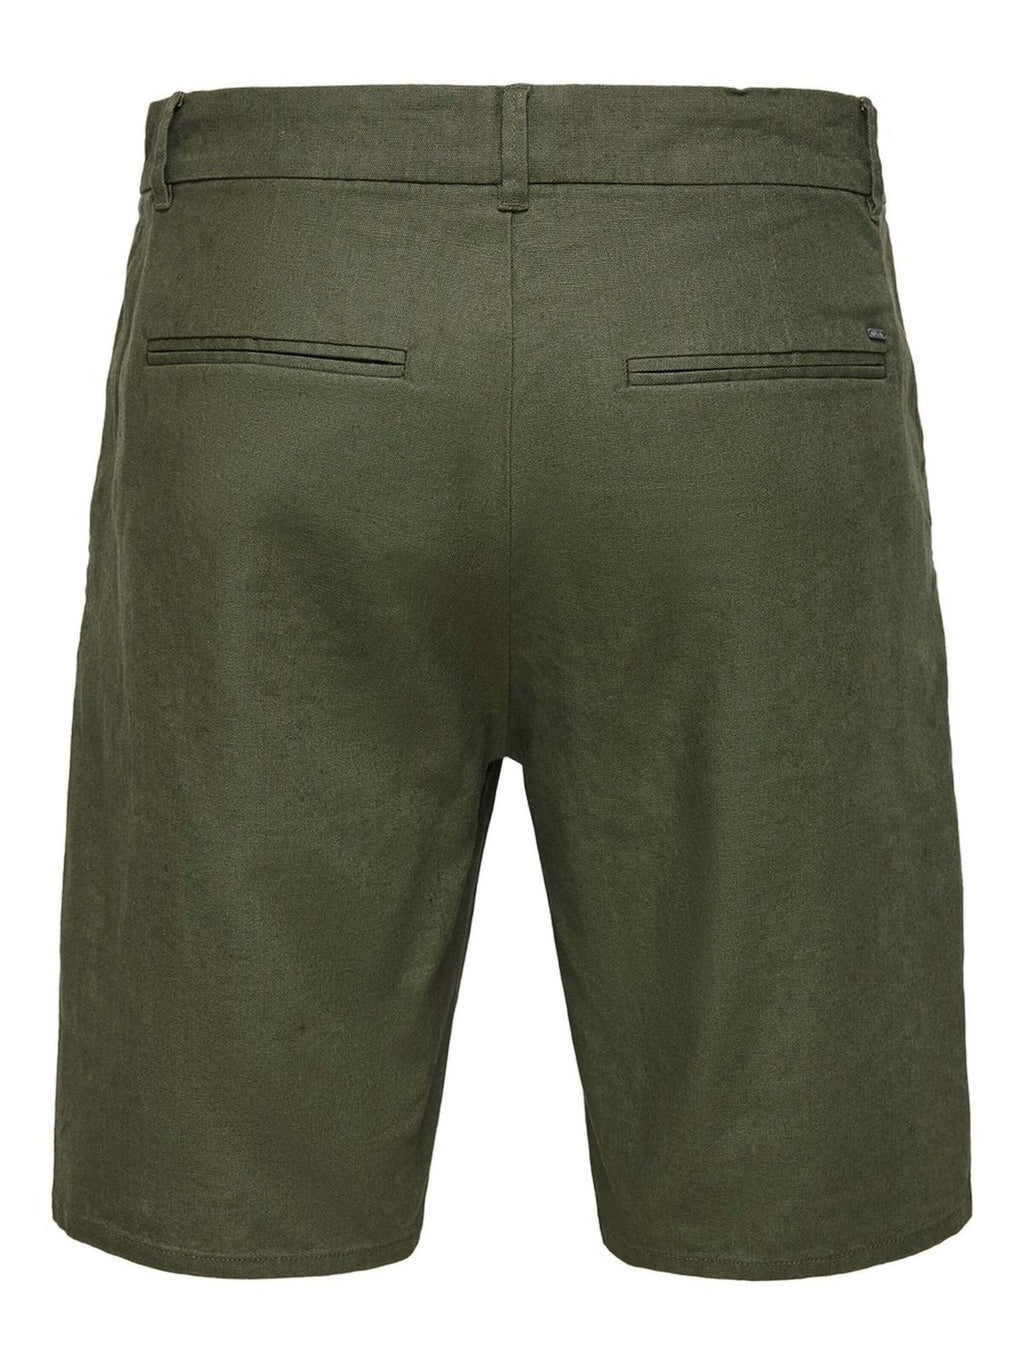 Hoor shorts - Olive Green